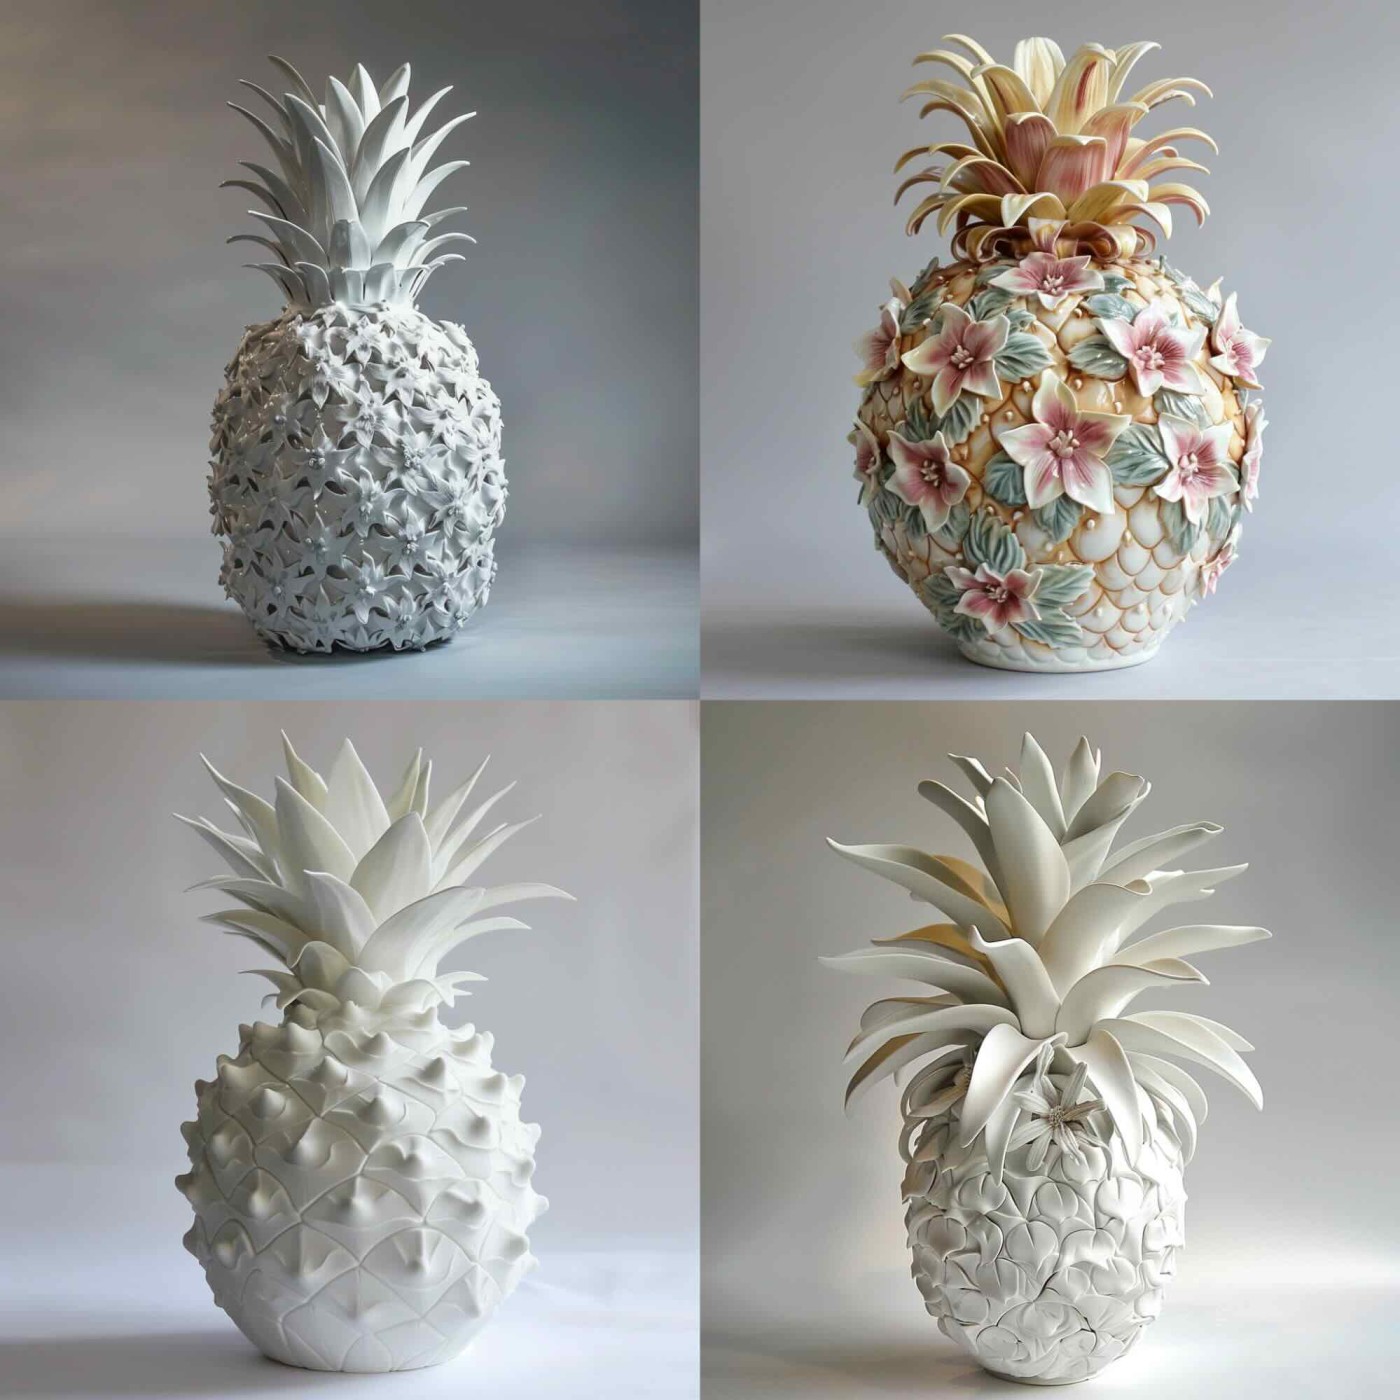 A pineapple, porcelain